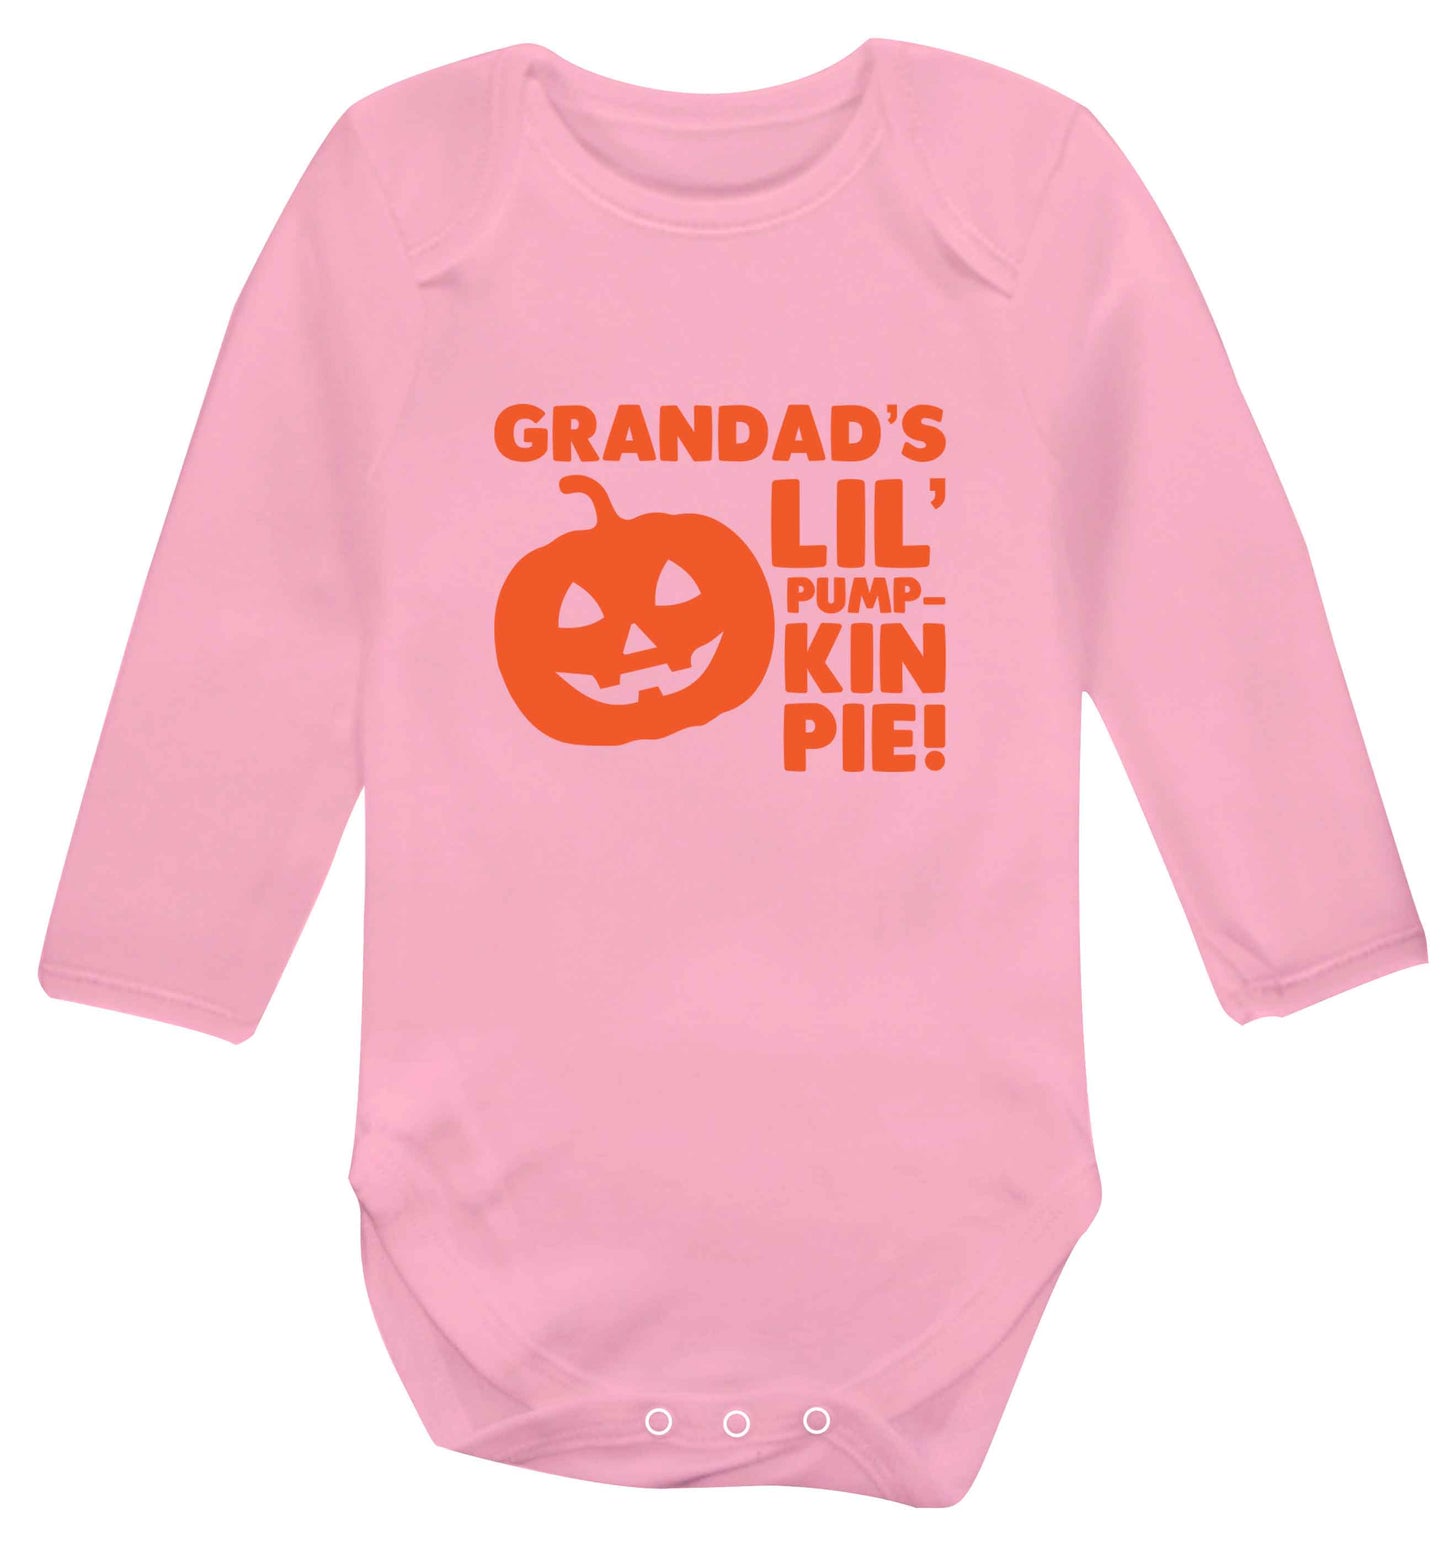 Grandad's lil' pumpkin pie baby vest long sleeved pale pink 6-12 months